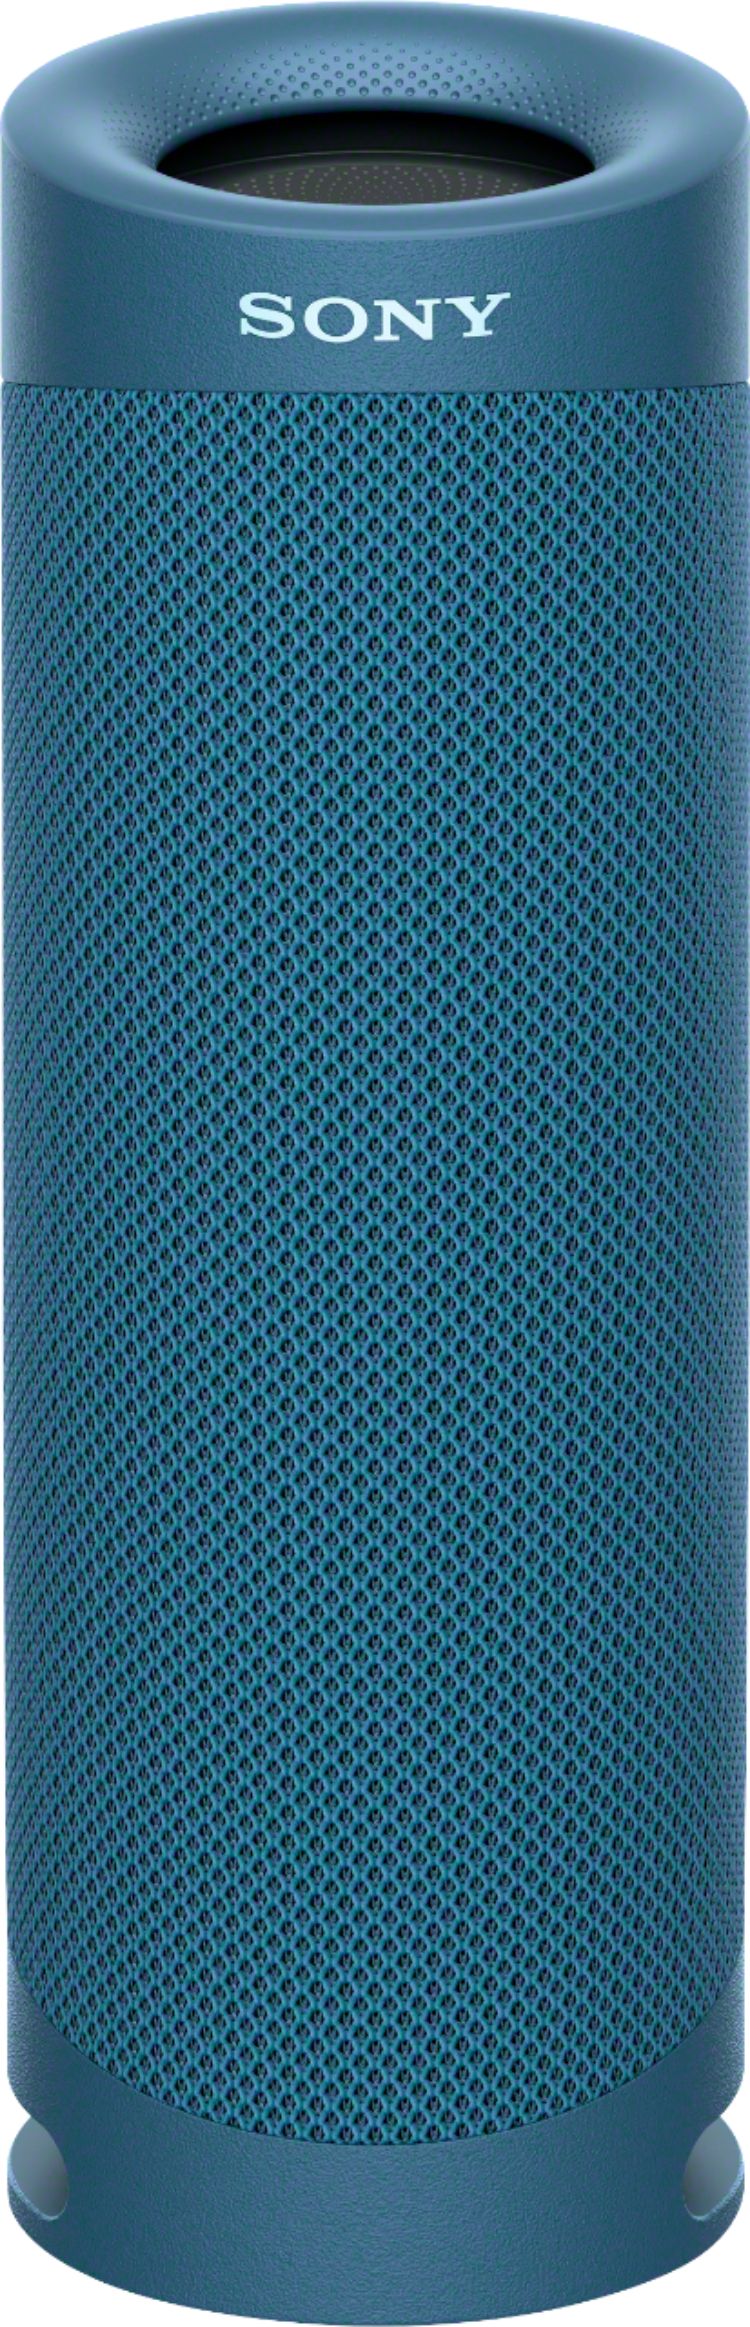 Best Buy: Sony SRS-XB23 Portable Bluetooth Speaker Light Blue 